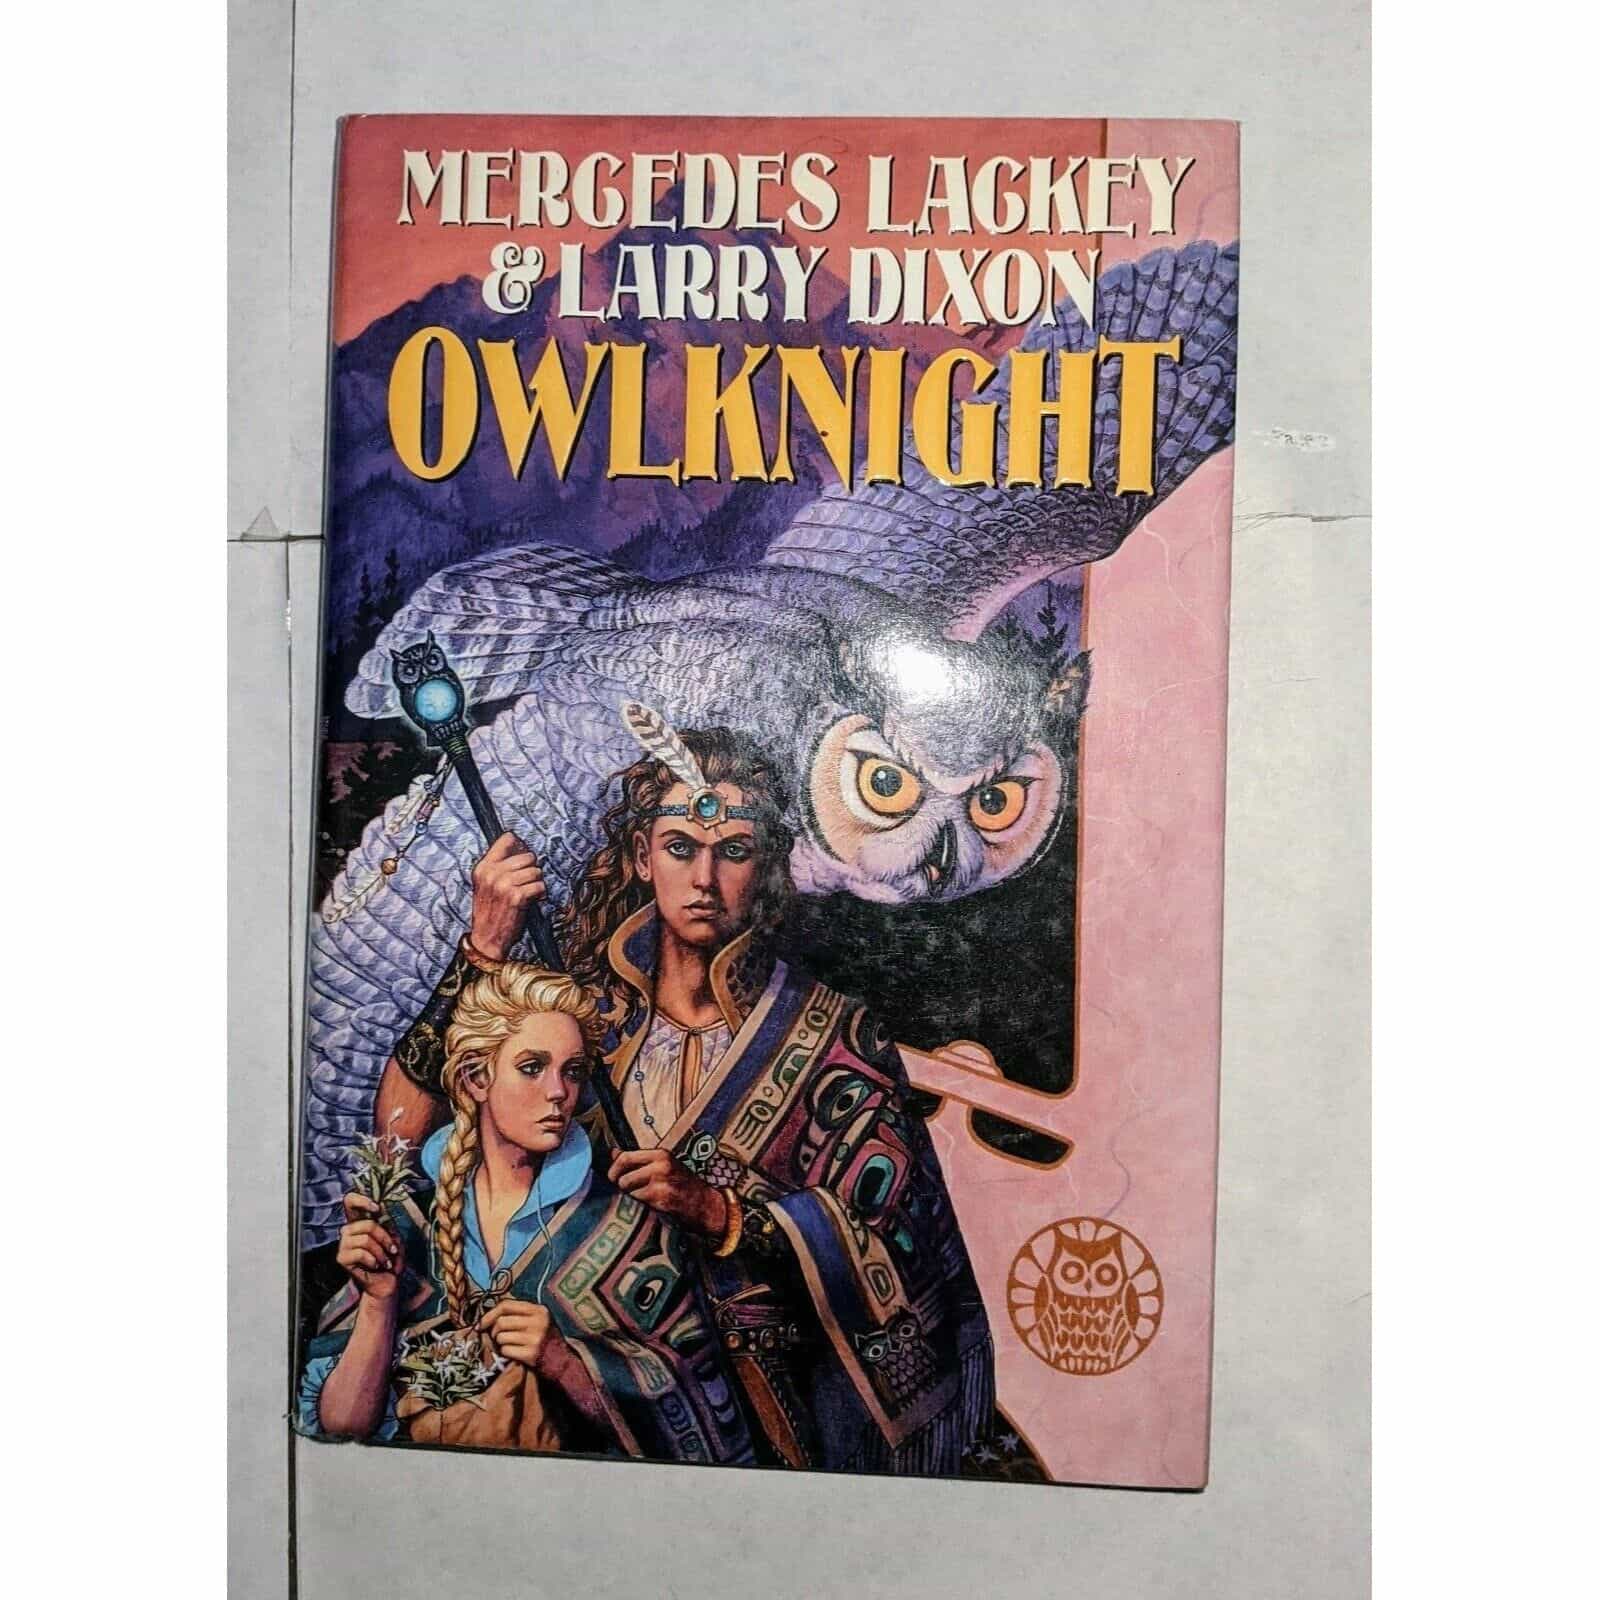 Owlknight by Mercedes Lackey & Larry Dixon Book